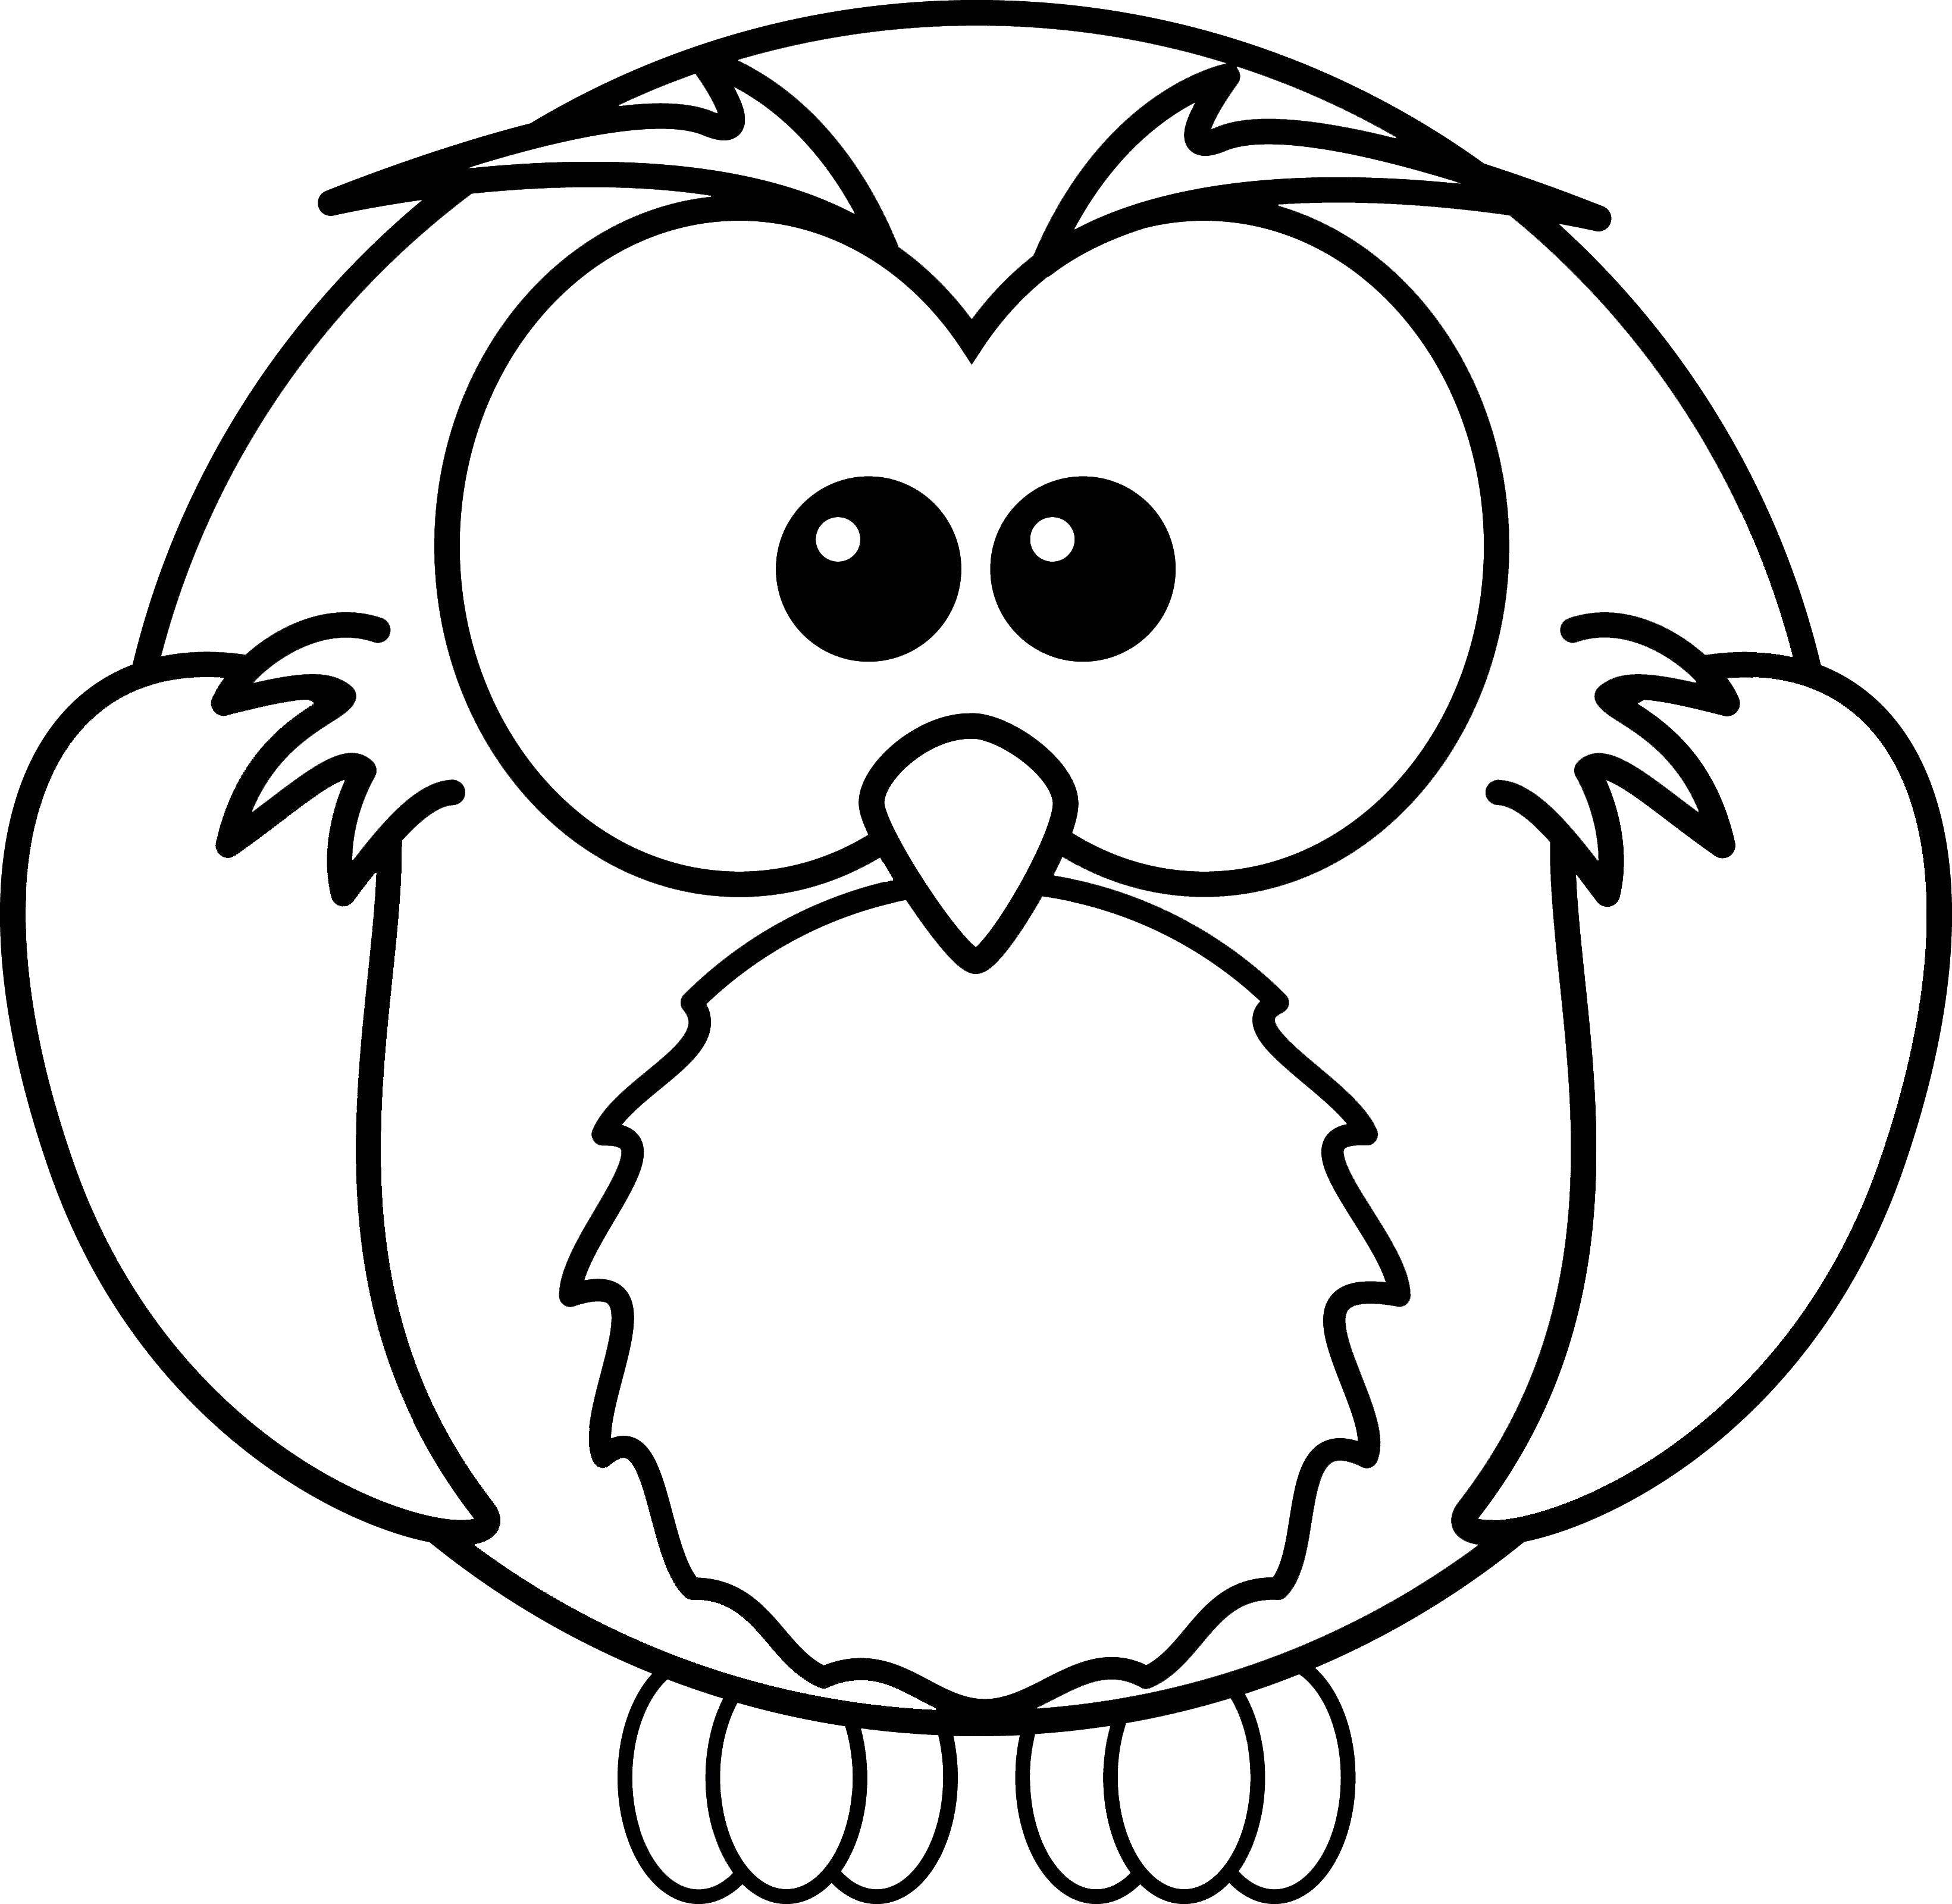 Coloring Round owl. Category birds. Tags:  birds, owls, birds.